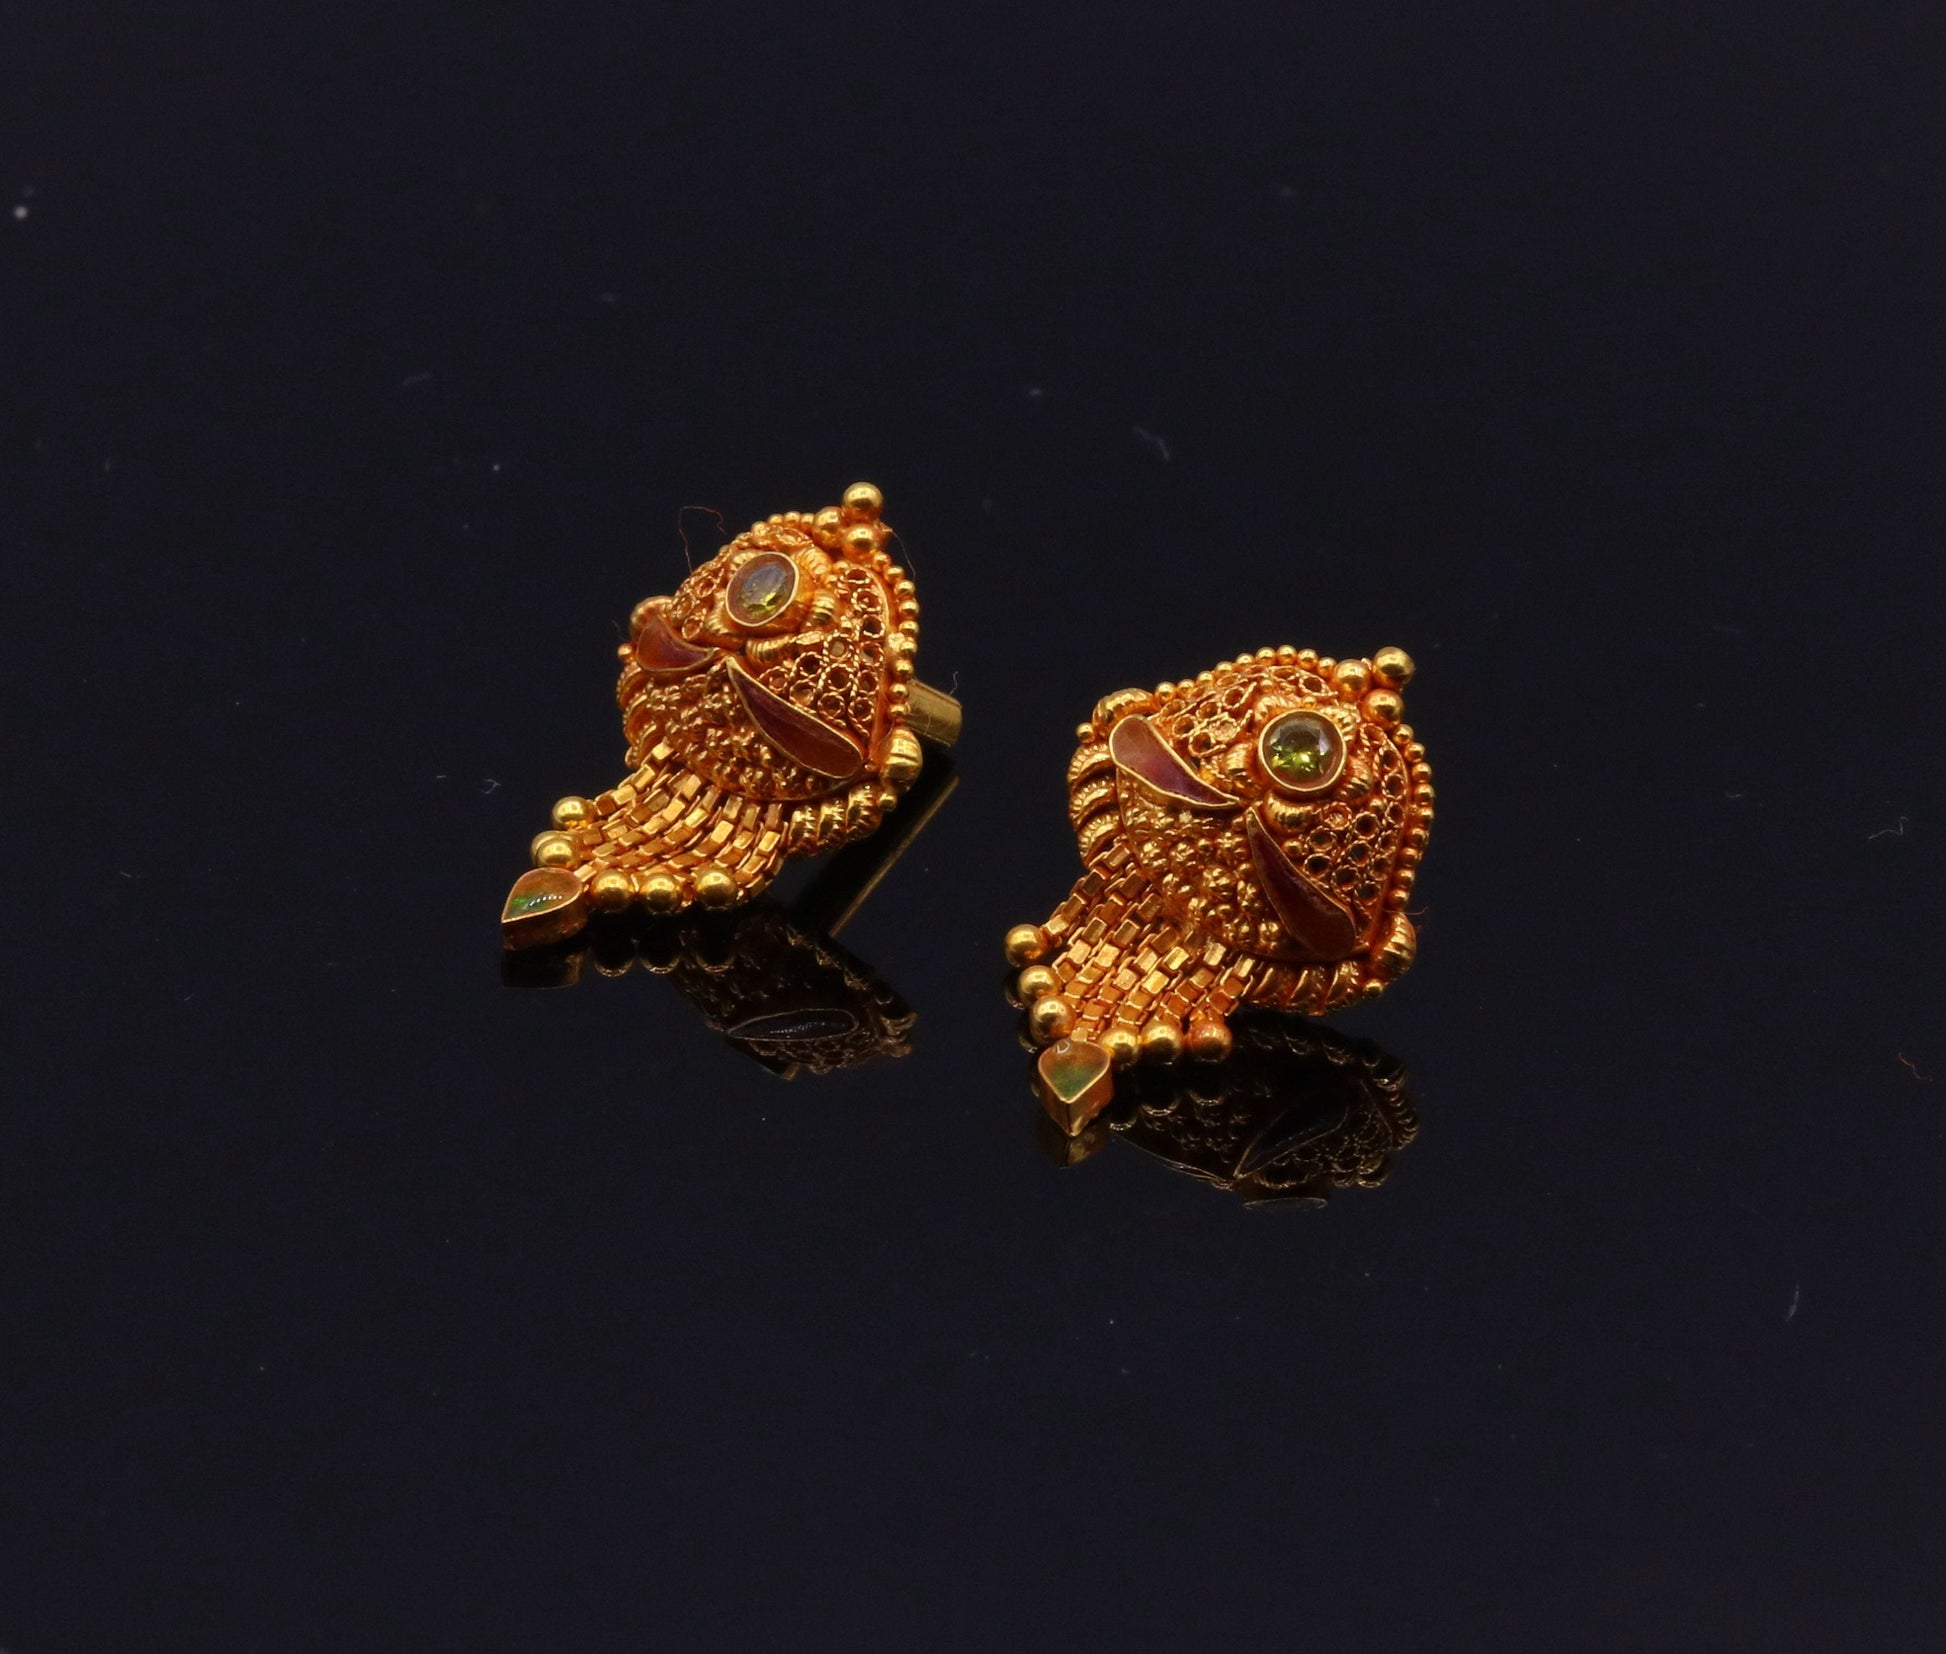 Vintage antique 22karat yellow gold handmade filigree work designer stud earrings pair women's tribal jewelry - TRIBAL ORNAMENTS